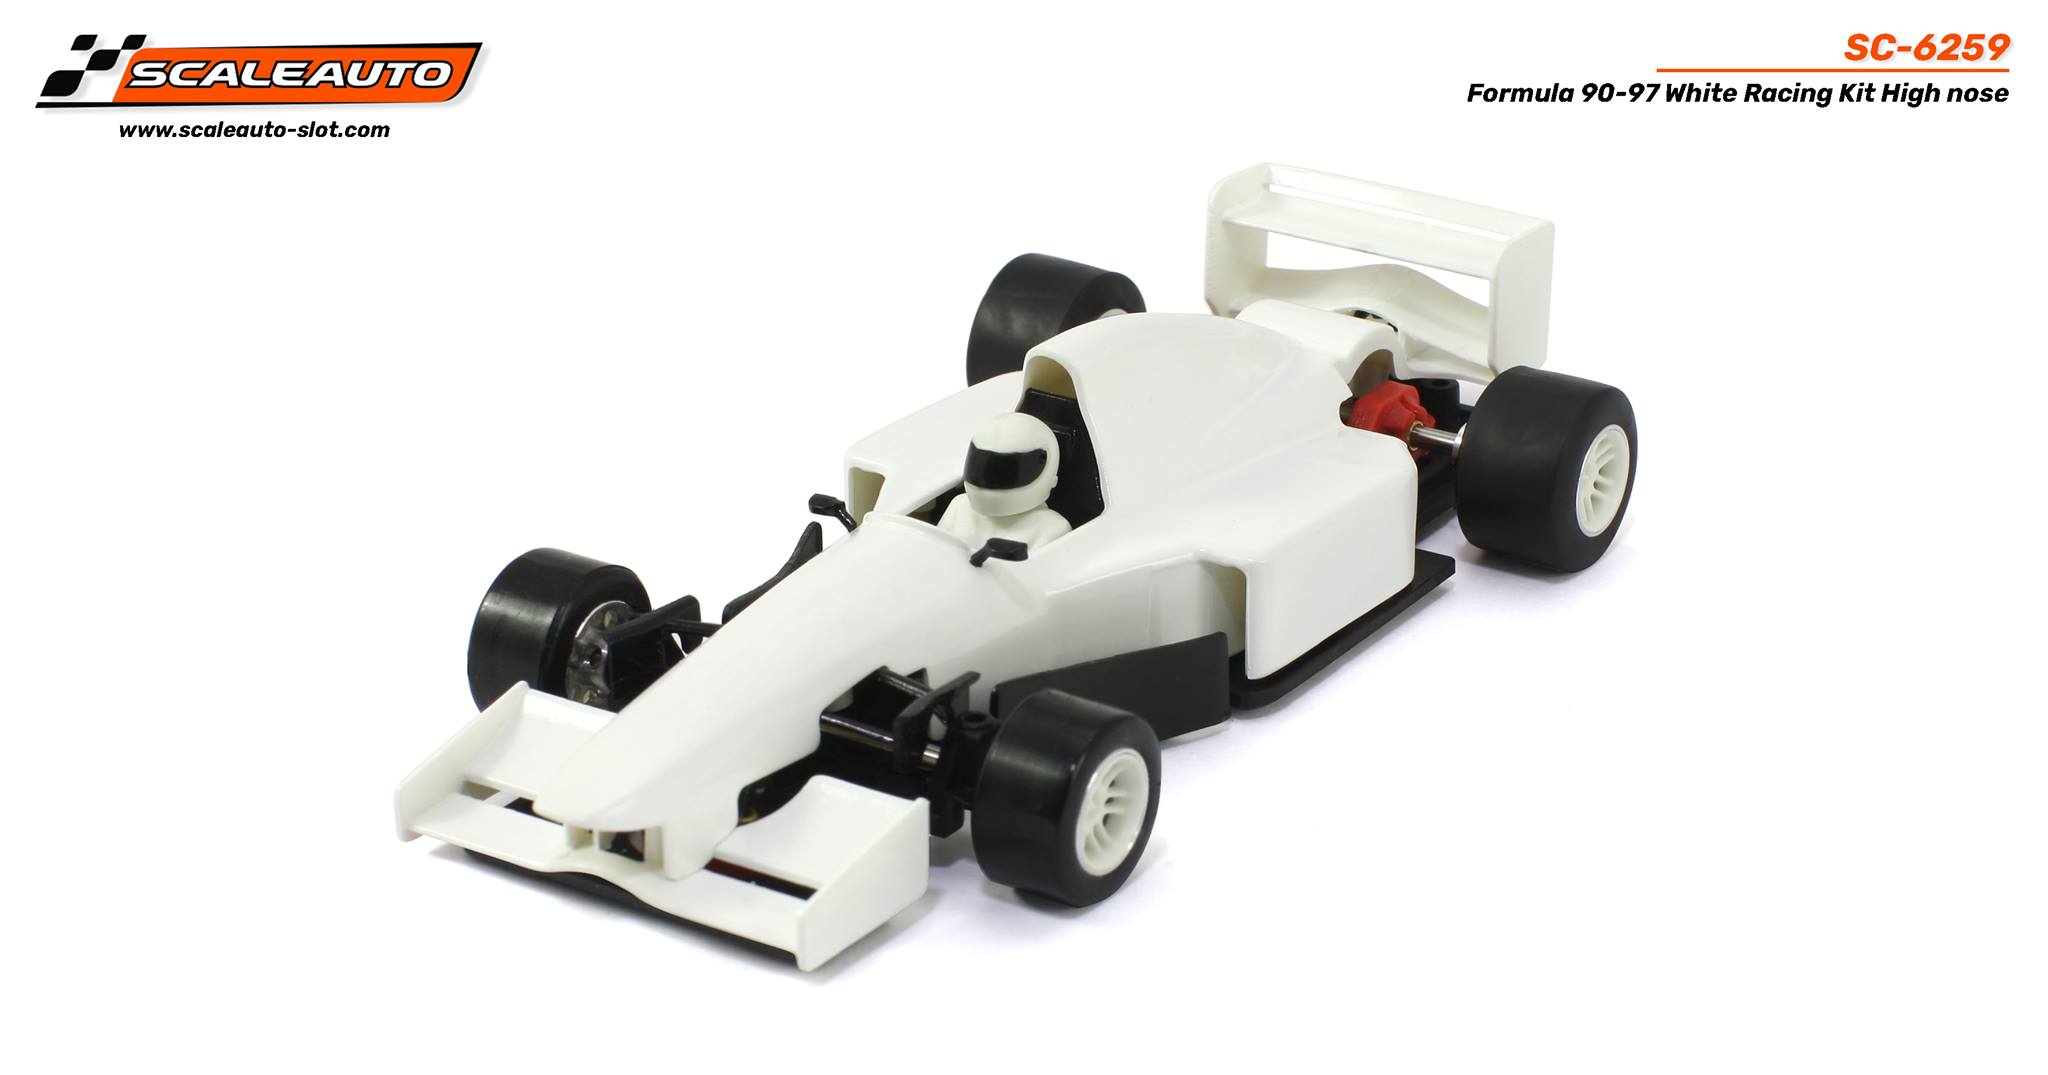 SC-6259 Formula 90-97 High Nose White kit car (Pre Order )